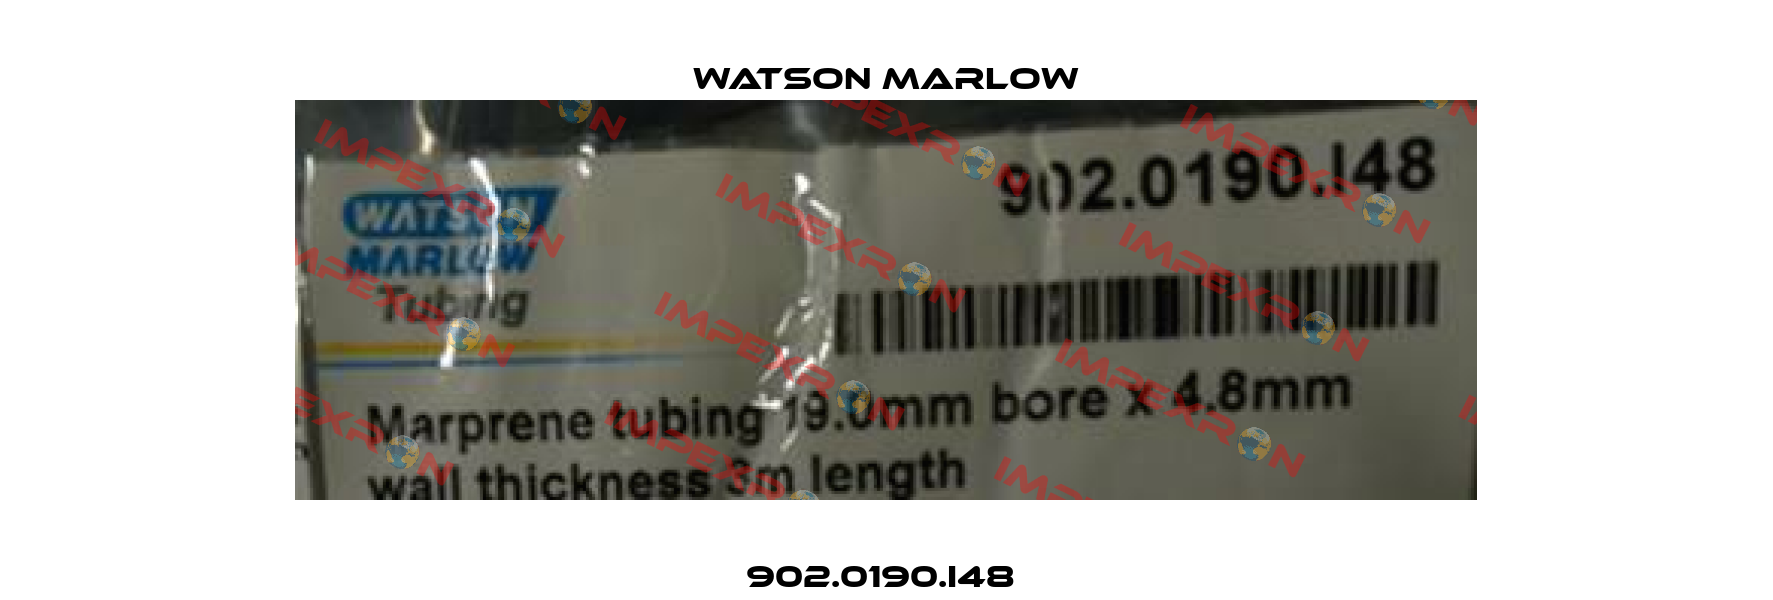 902.0190.I48  Watson Marlow